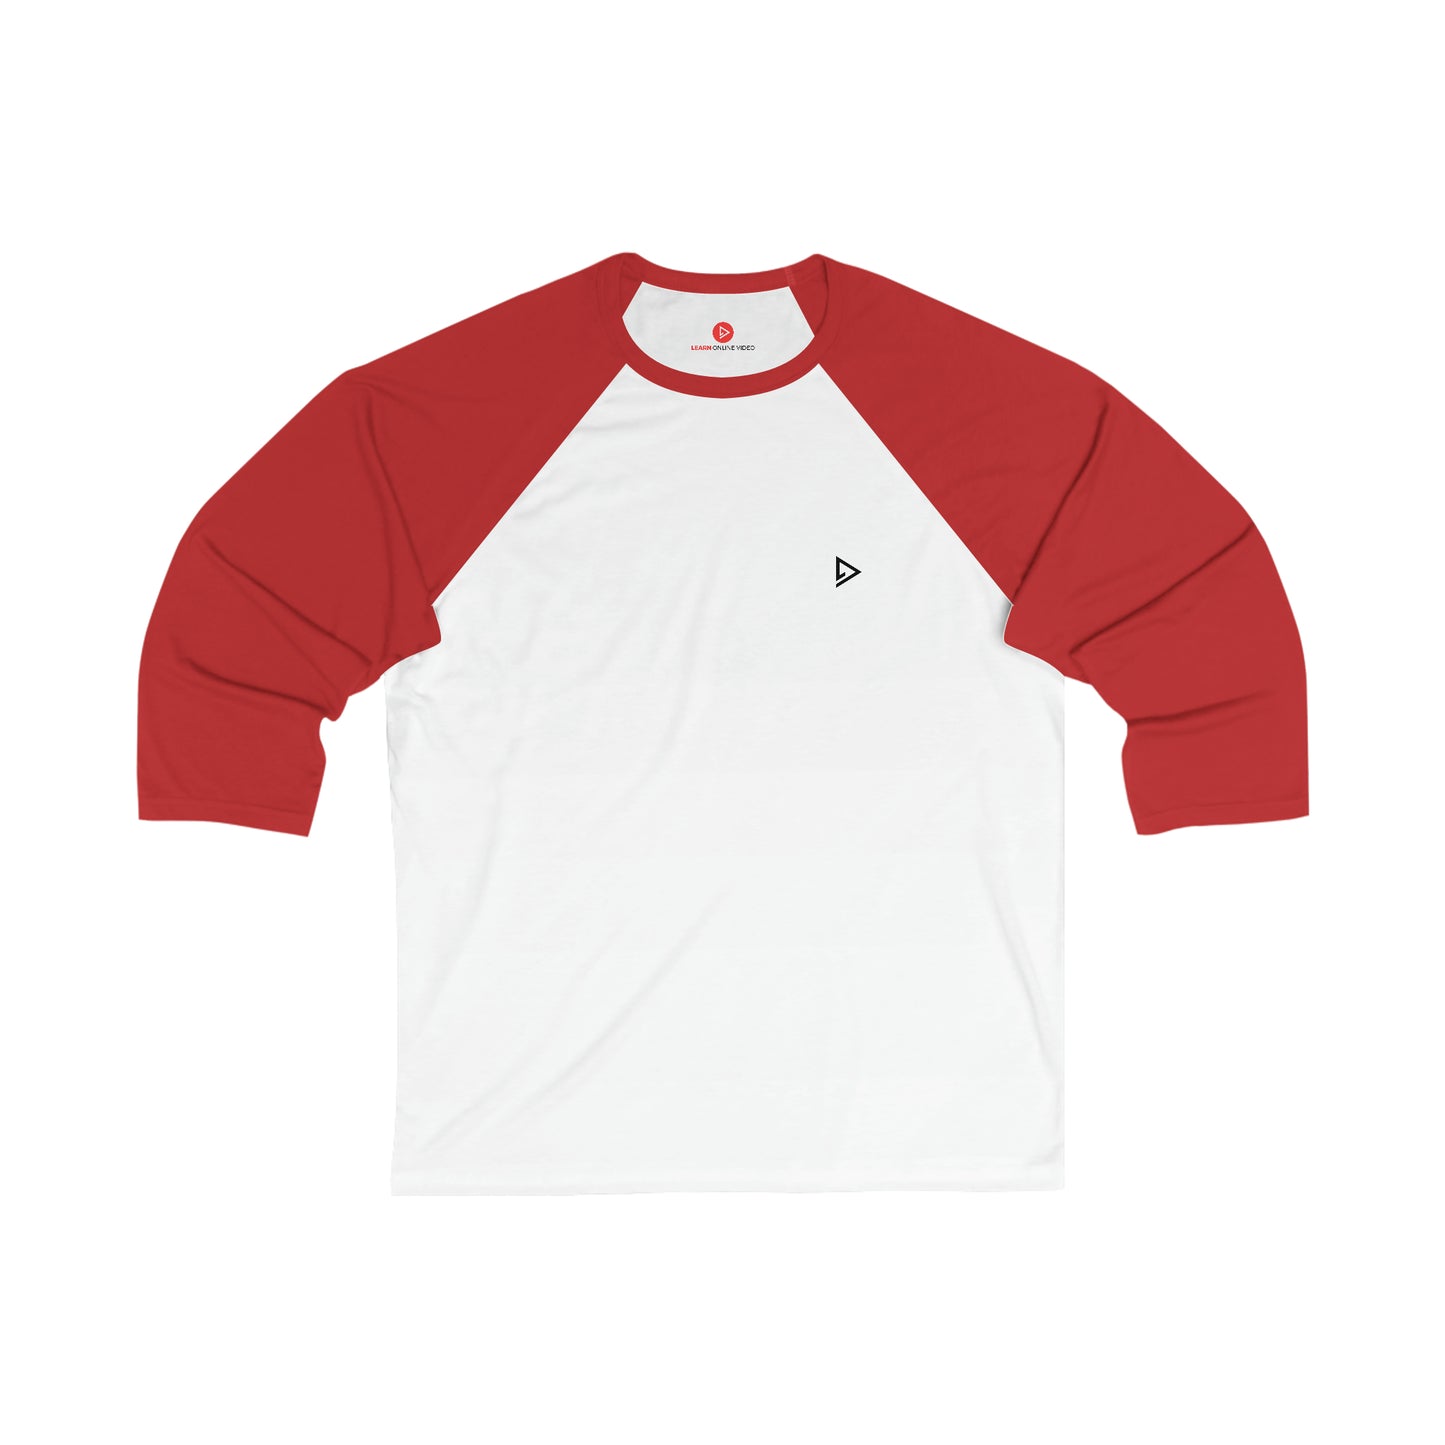 Baseball 3\4 Sleeve Red/White Tee